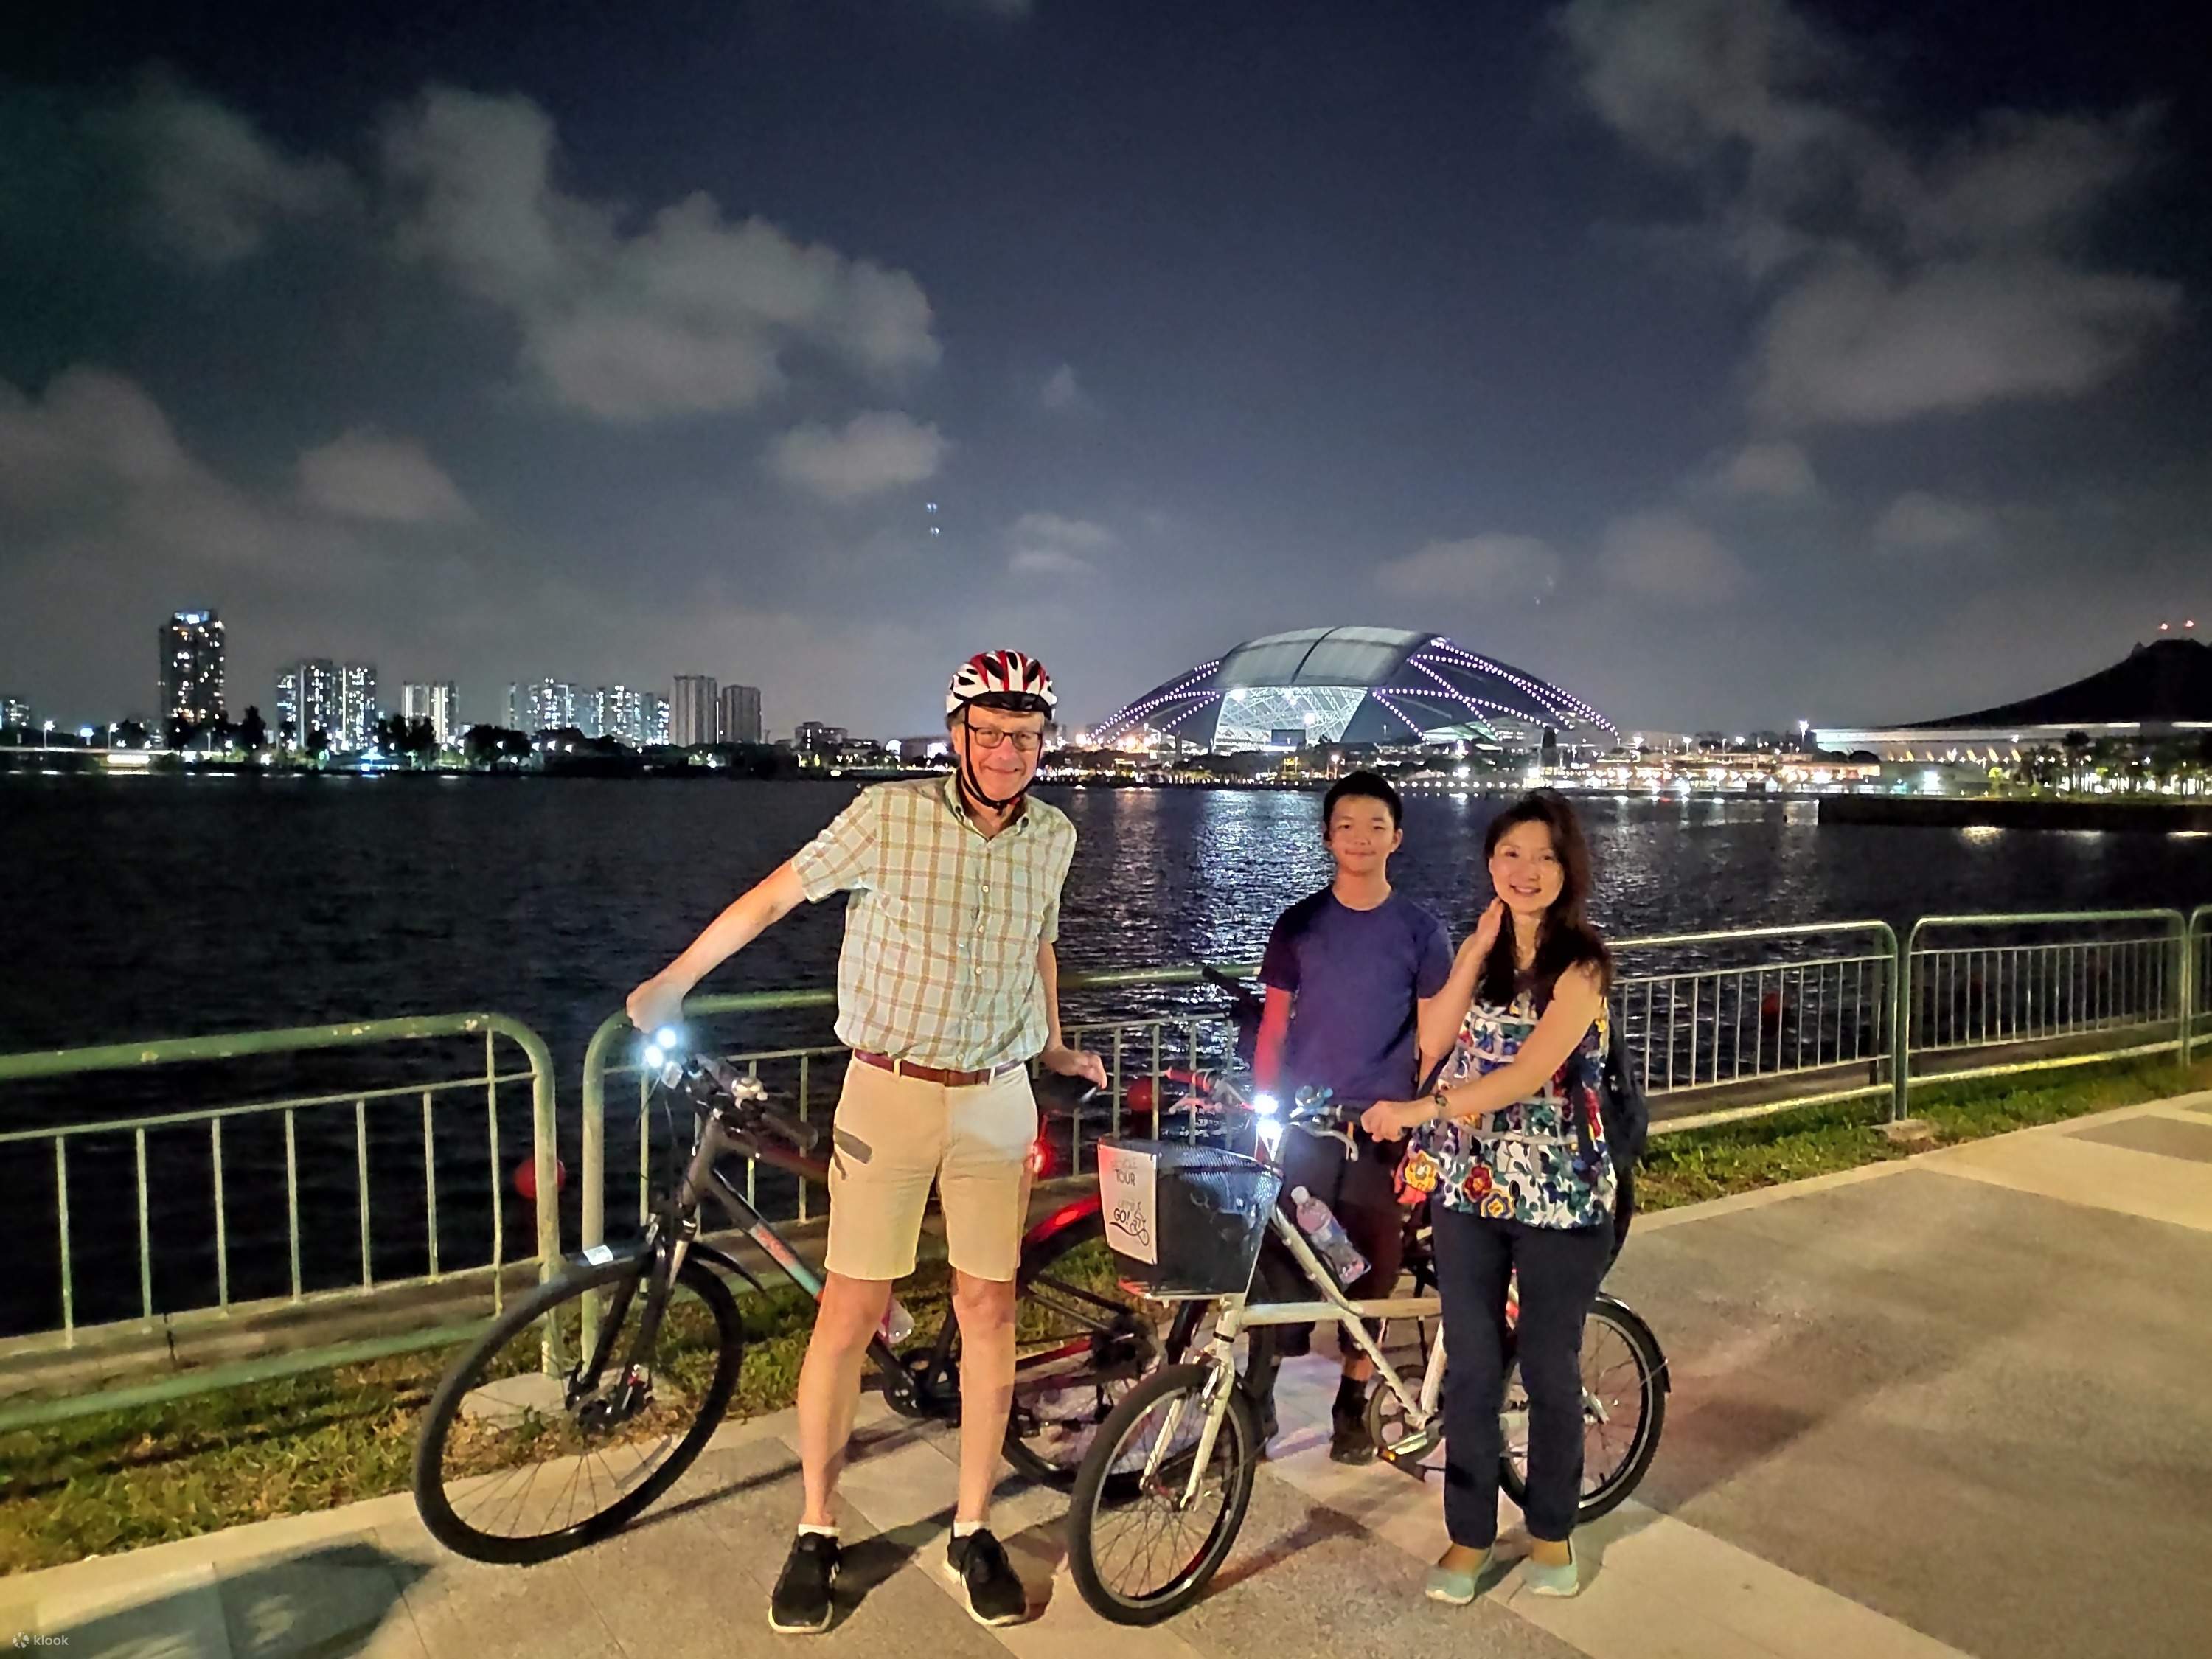 Marina Night Skyline Guided Tour with Two Way Transfers - Klook Singapore